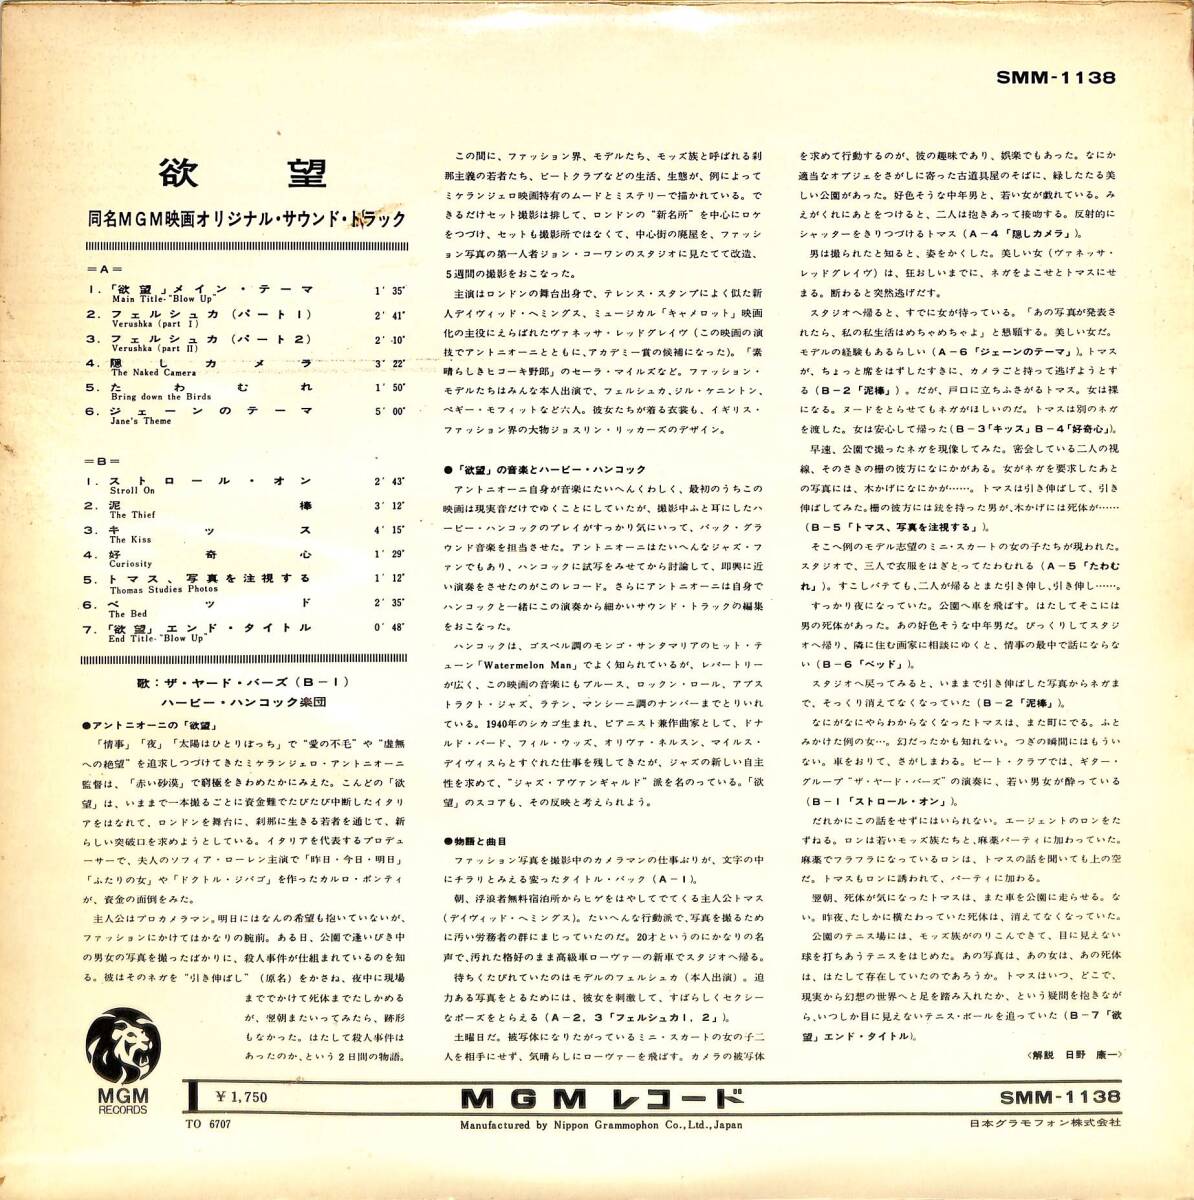 A00593421/LP/ヤード・バーズ/ハービー・ハンコック楽団「欲望:OST」